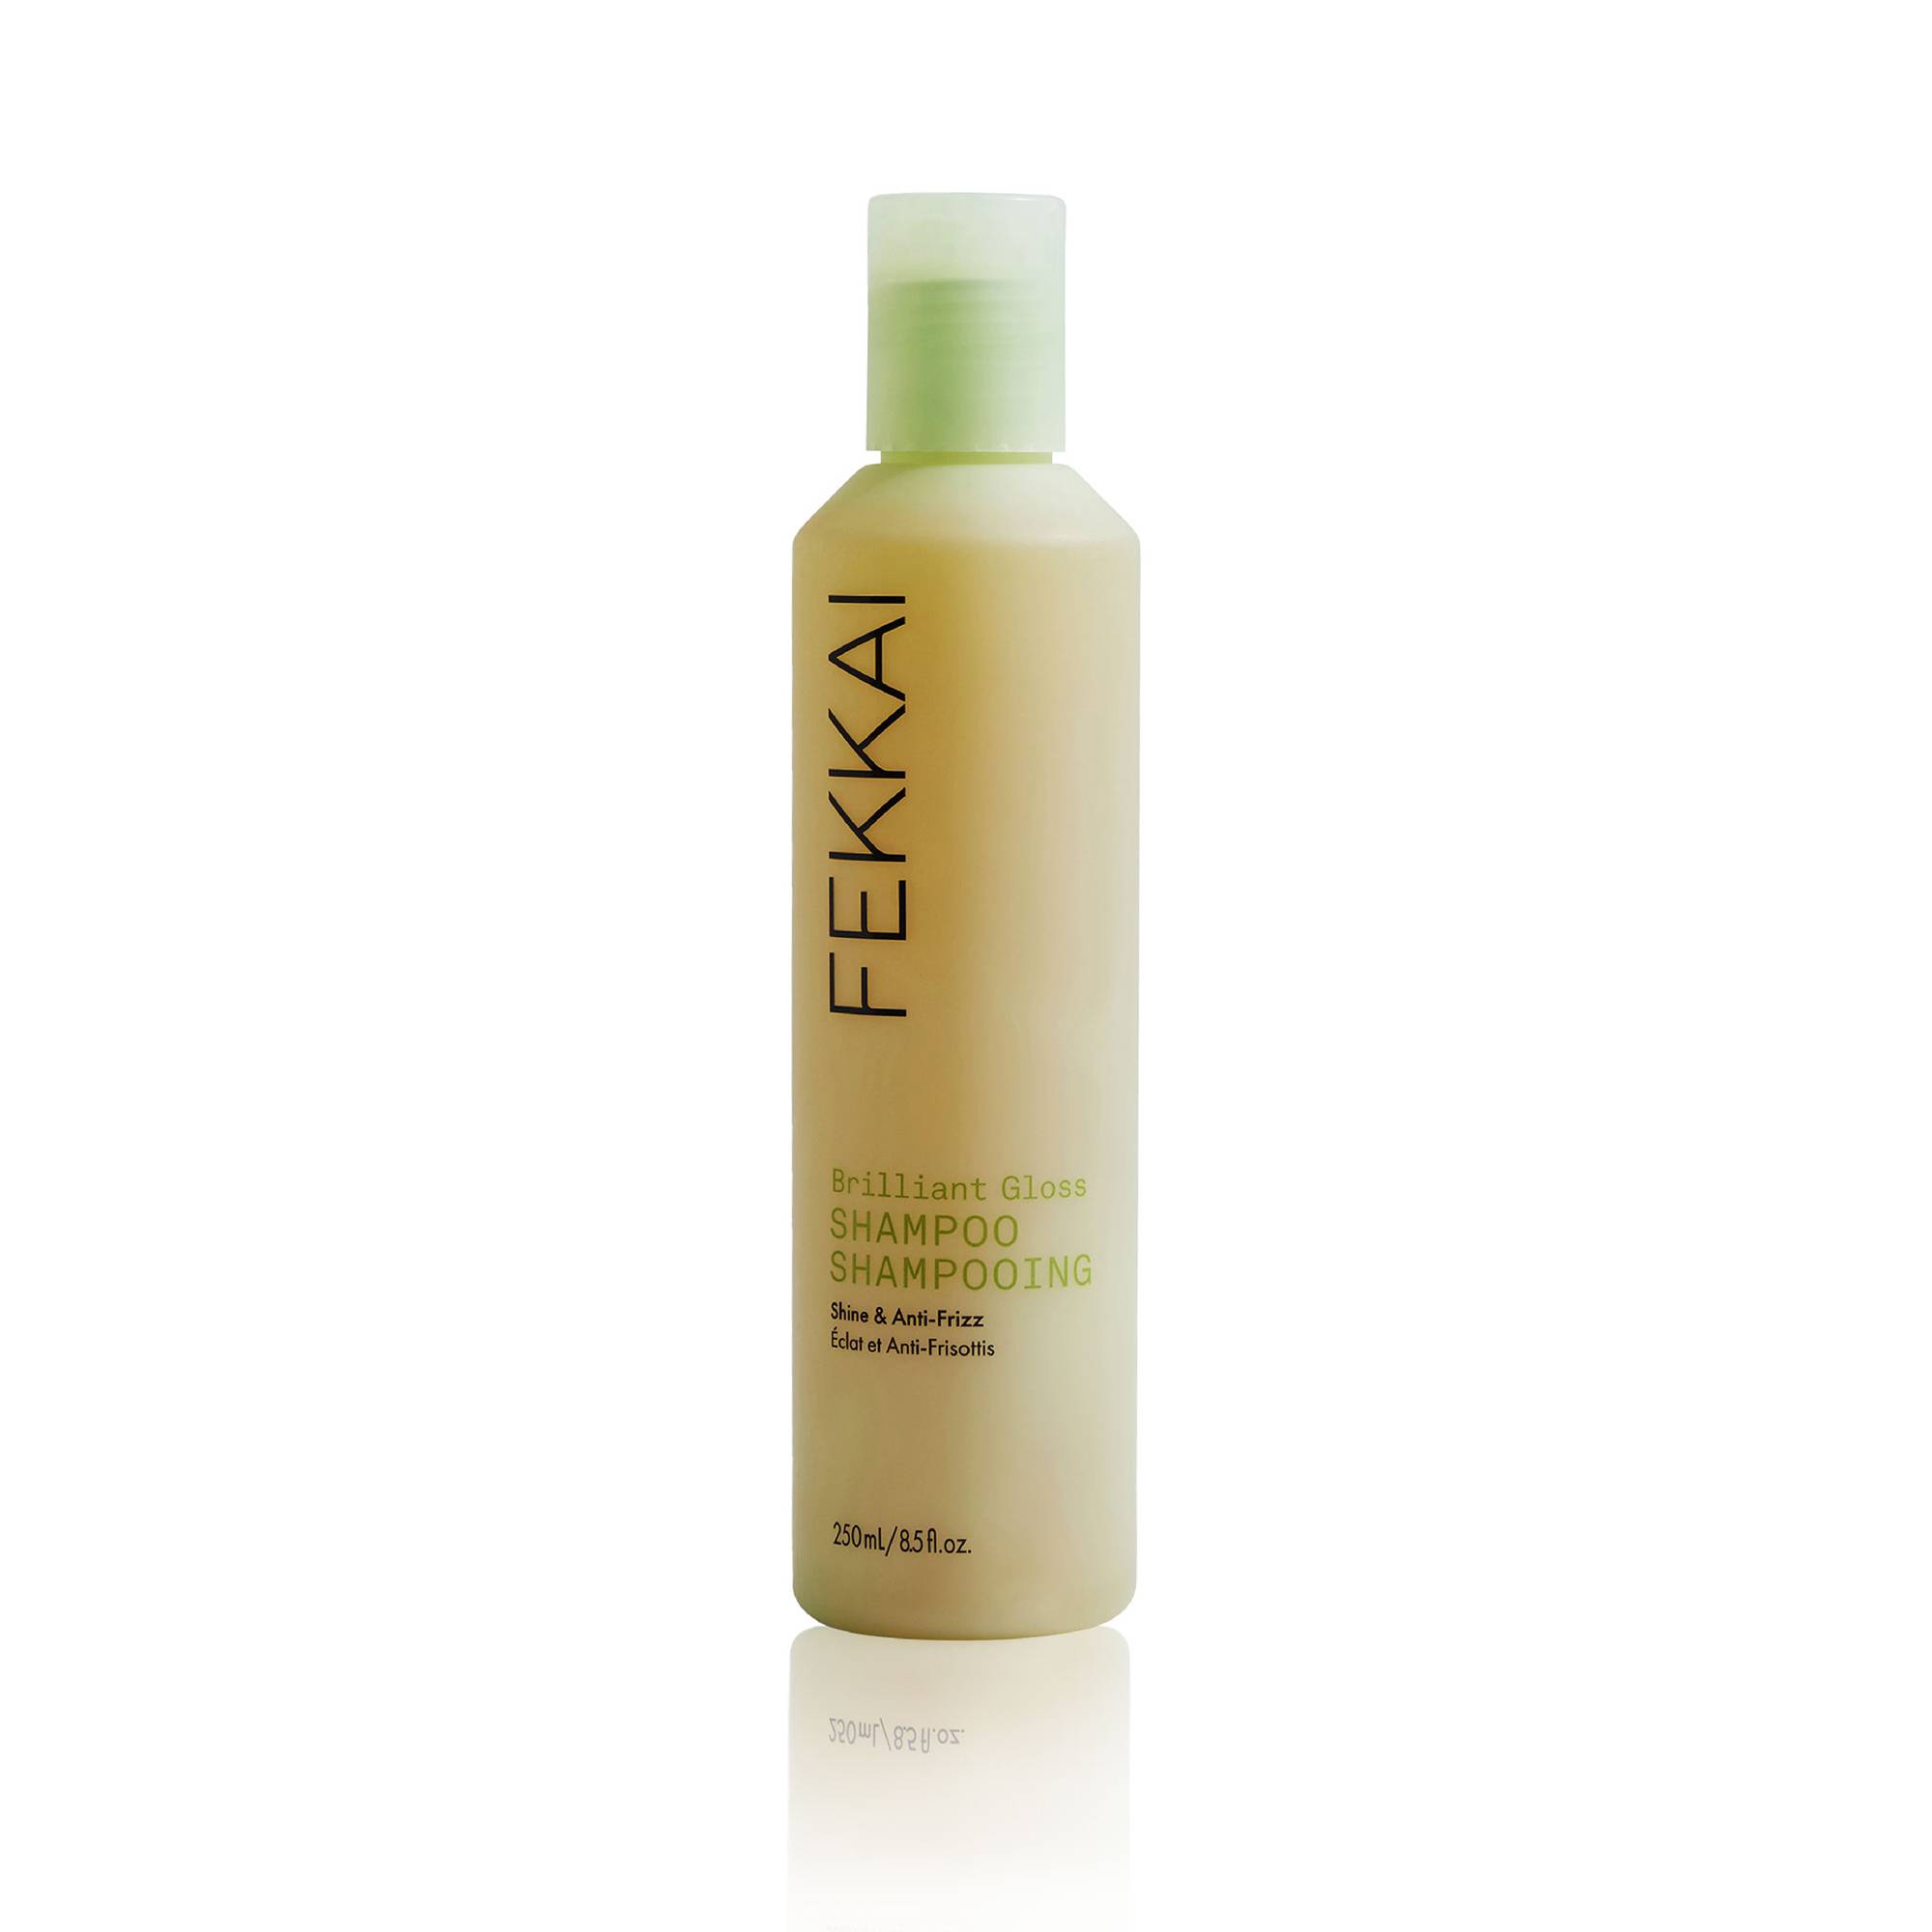 Shampoing brillance et anti-frisottis Brilliant Gloss de la marque Fekkai Contenance 250ml - 1